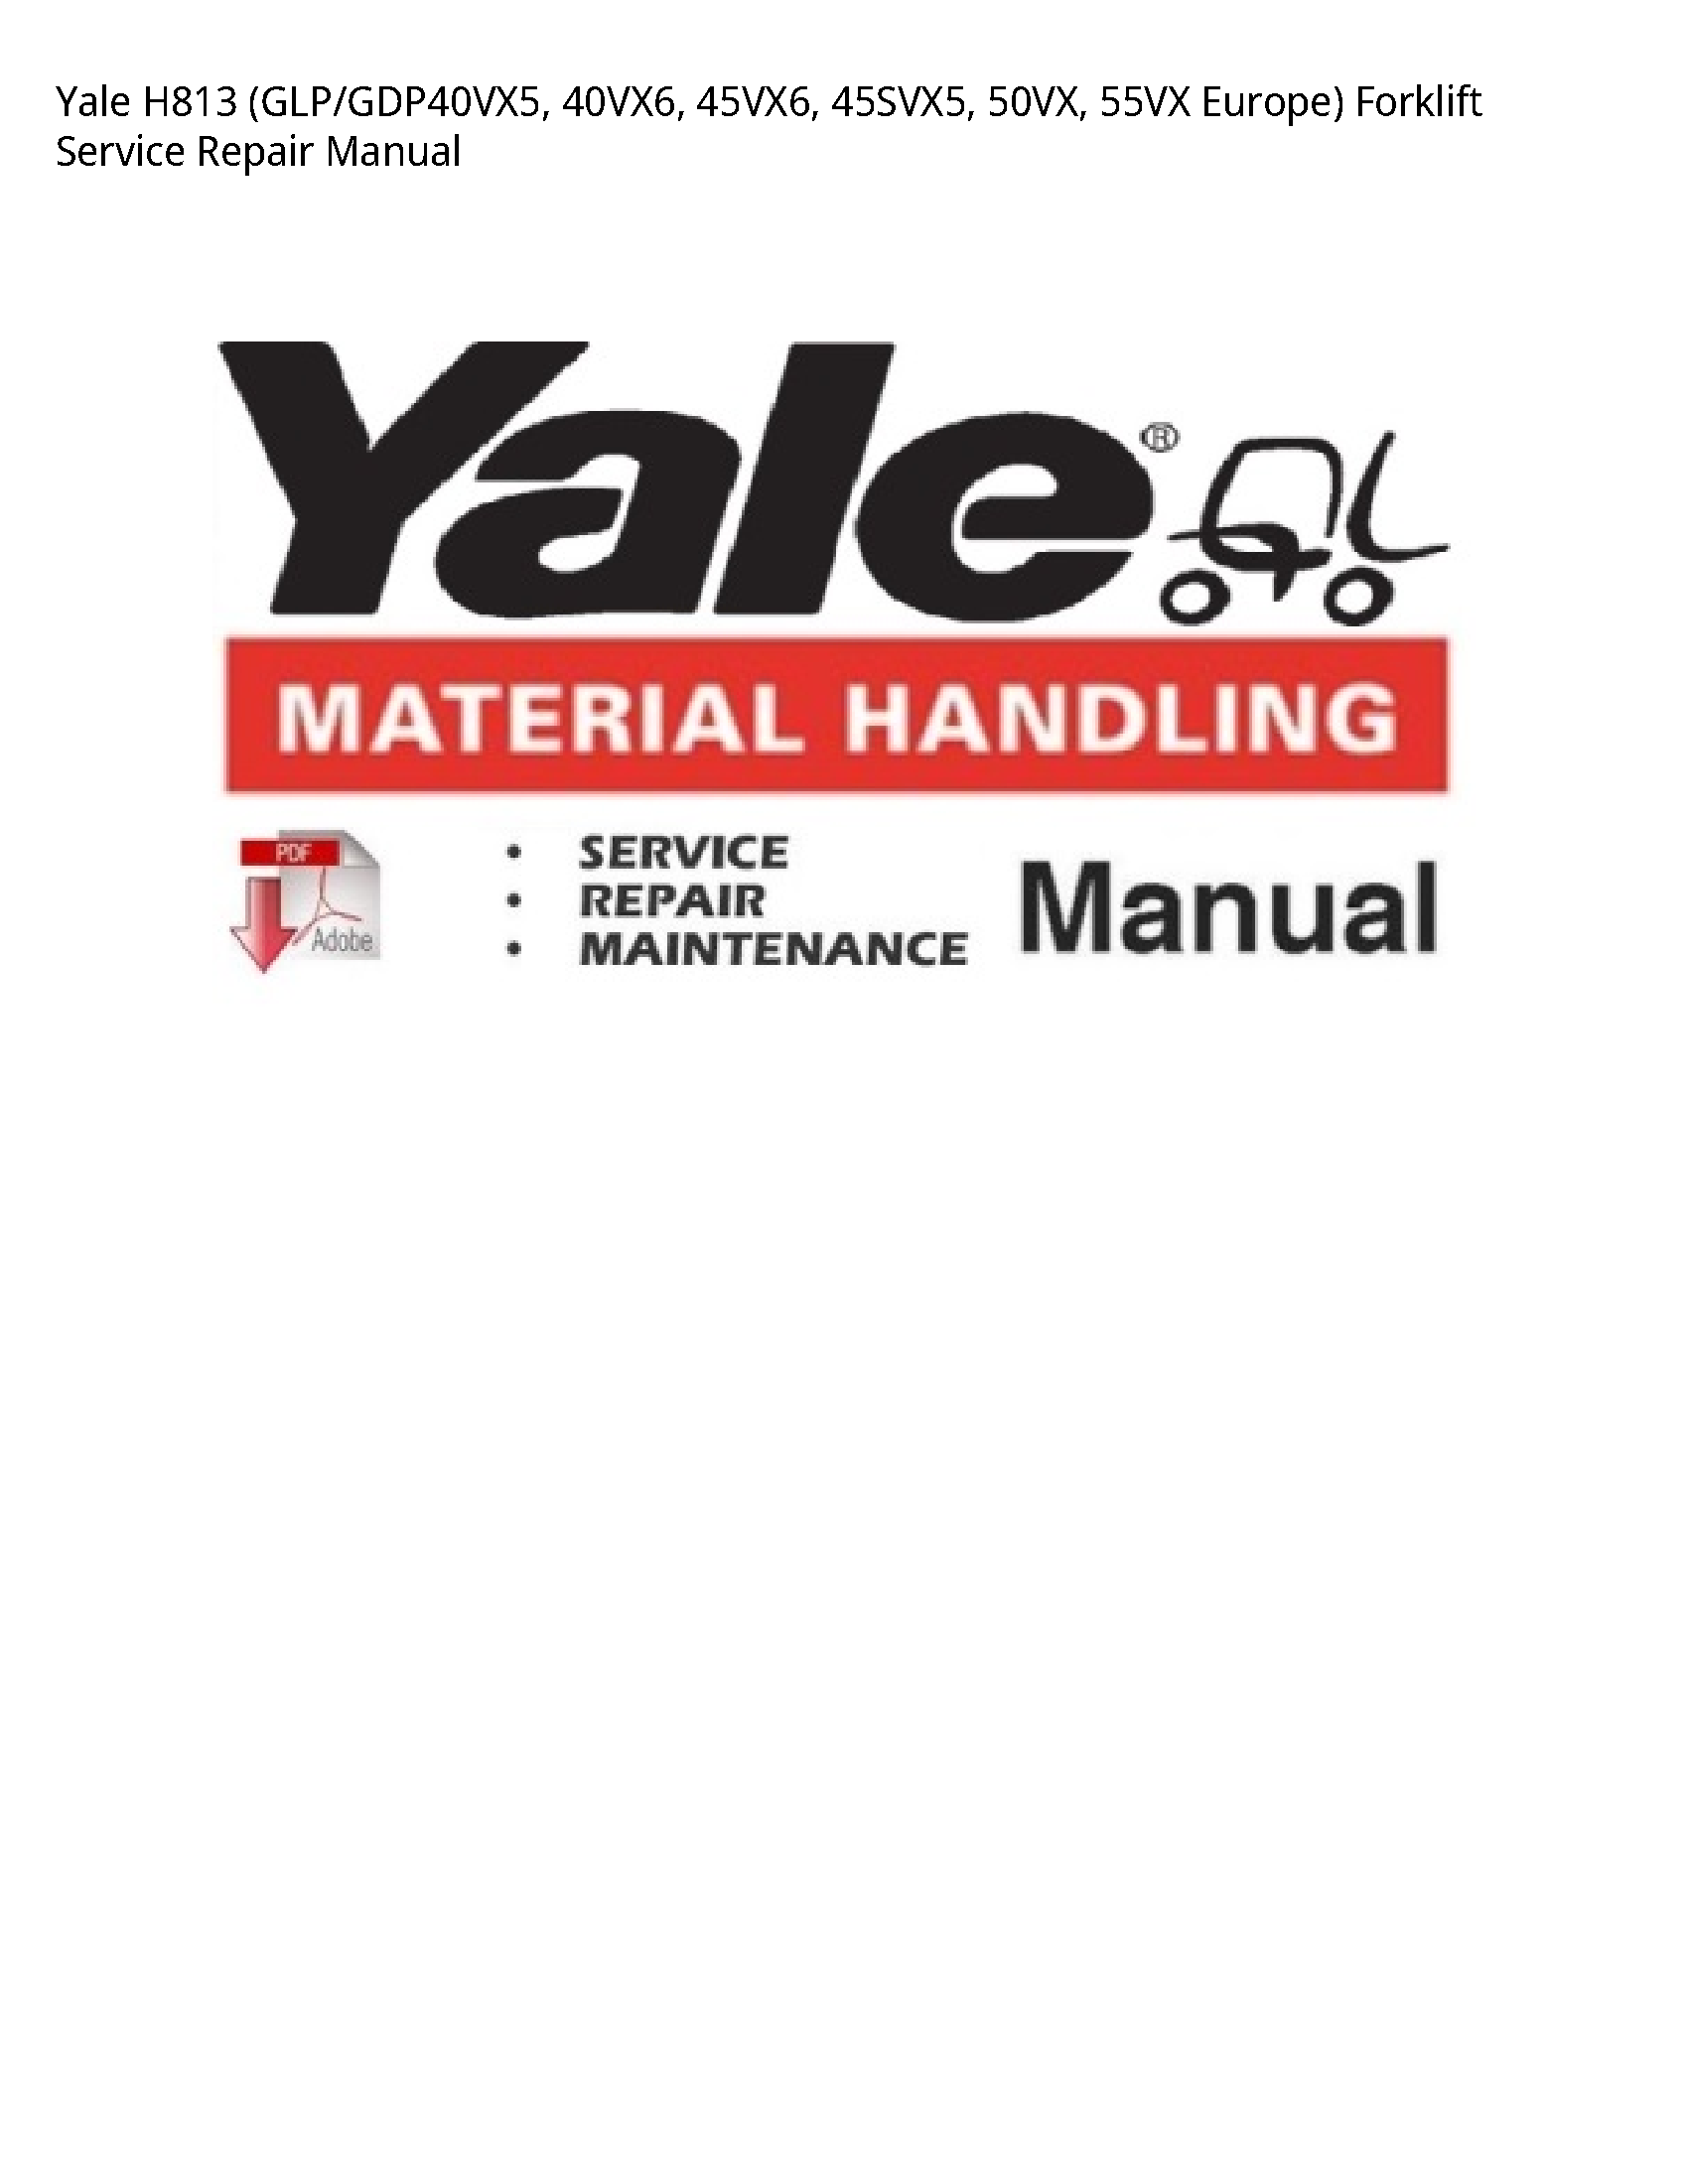 Yale H813 Europe) Forklift manual